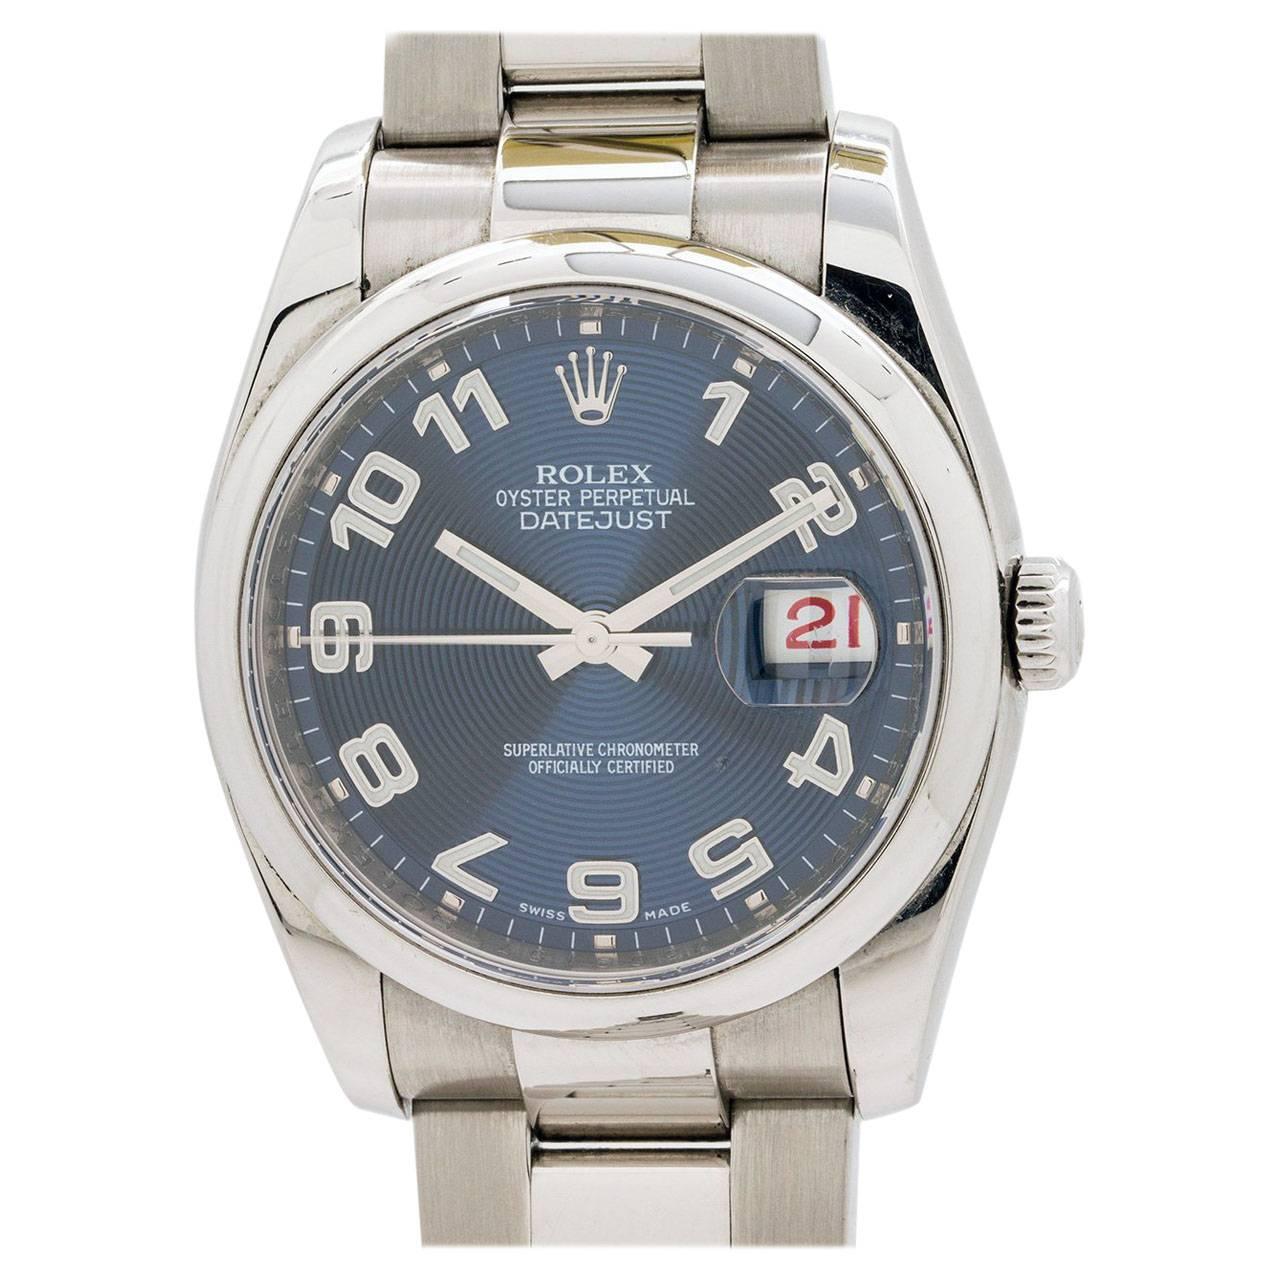 Rolex Stainless Steel Datejust Self Winding Wristwatch Ref 16200, circa 2002